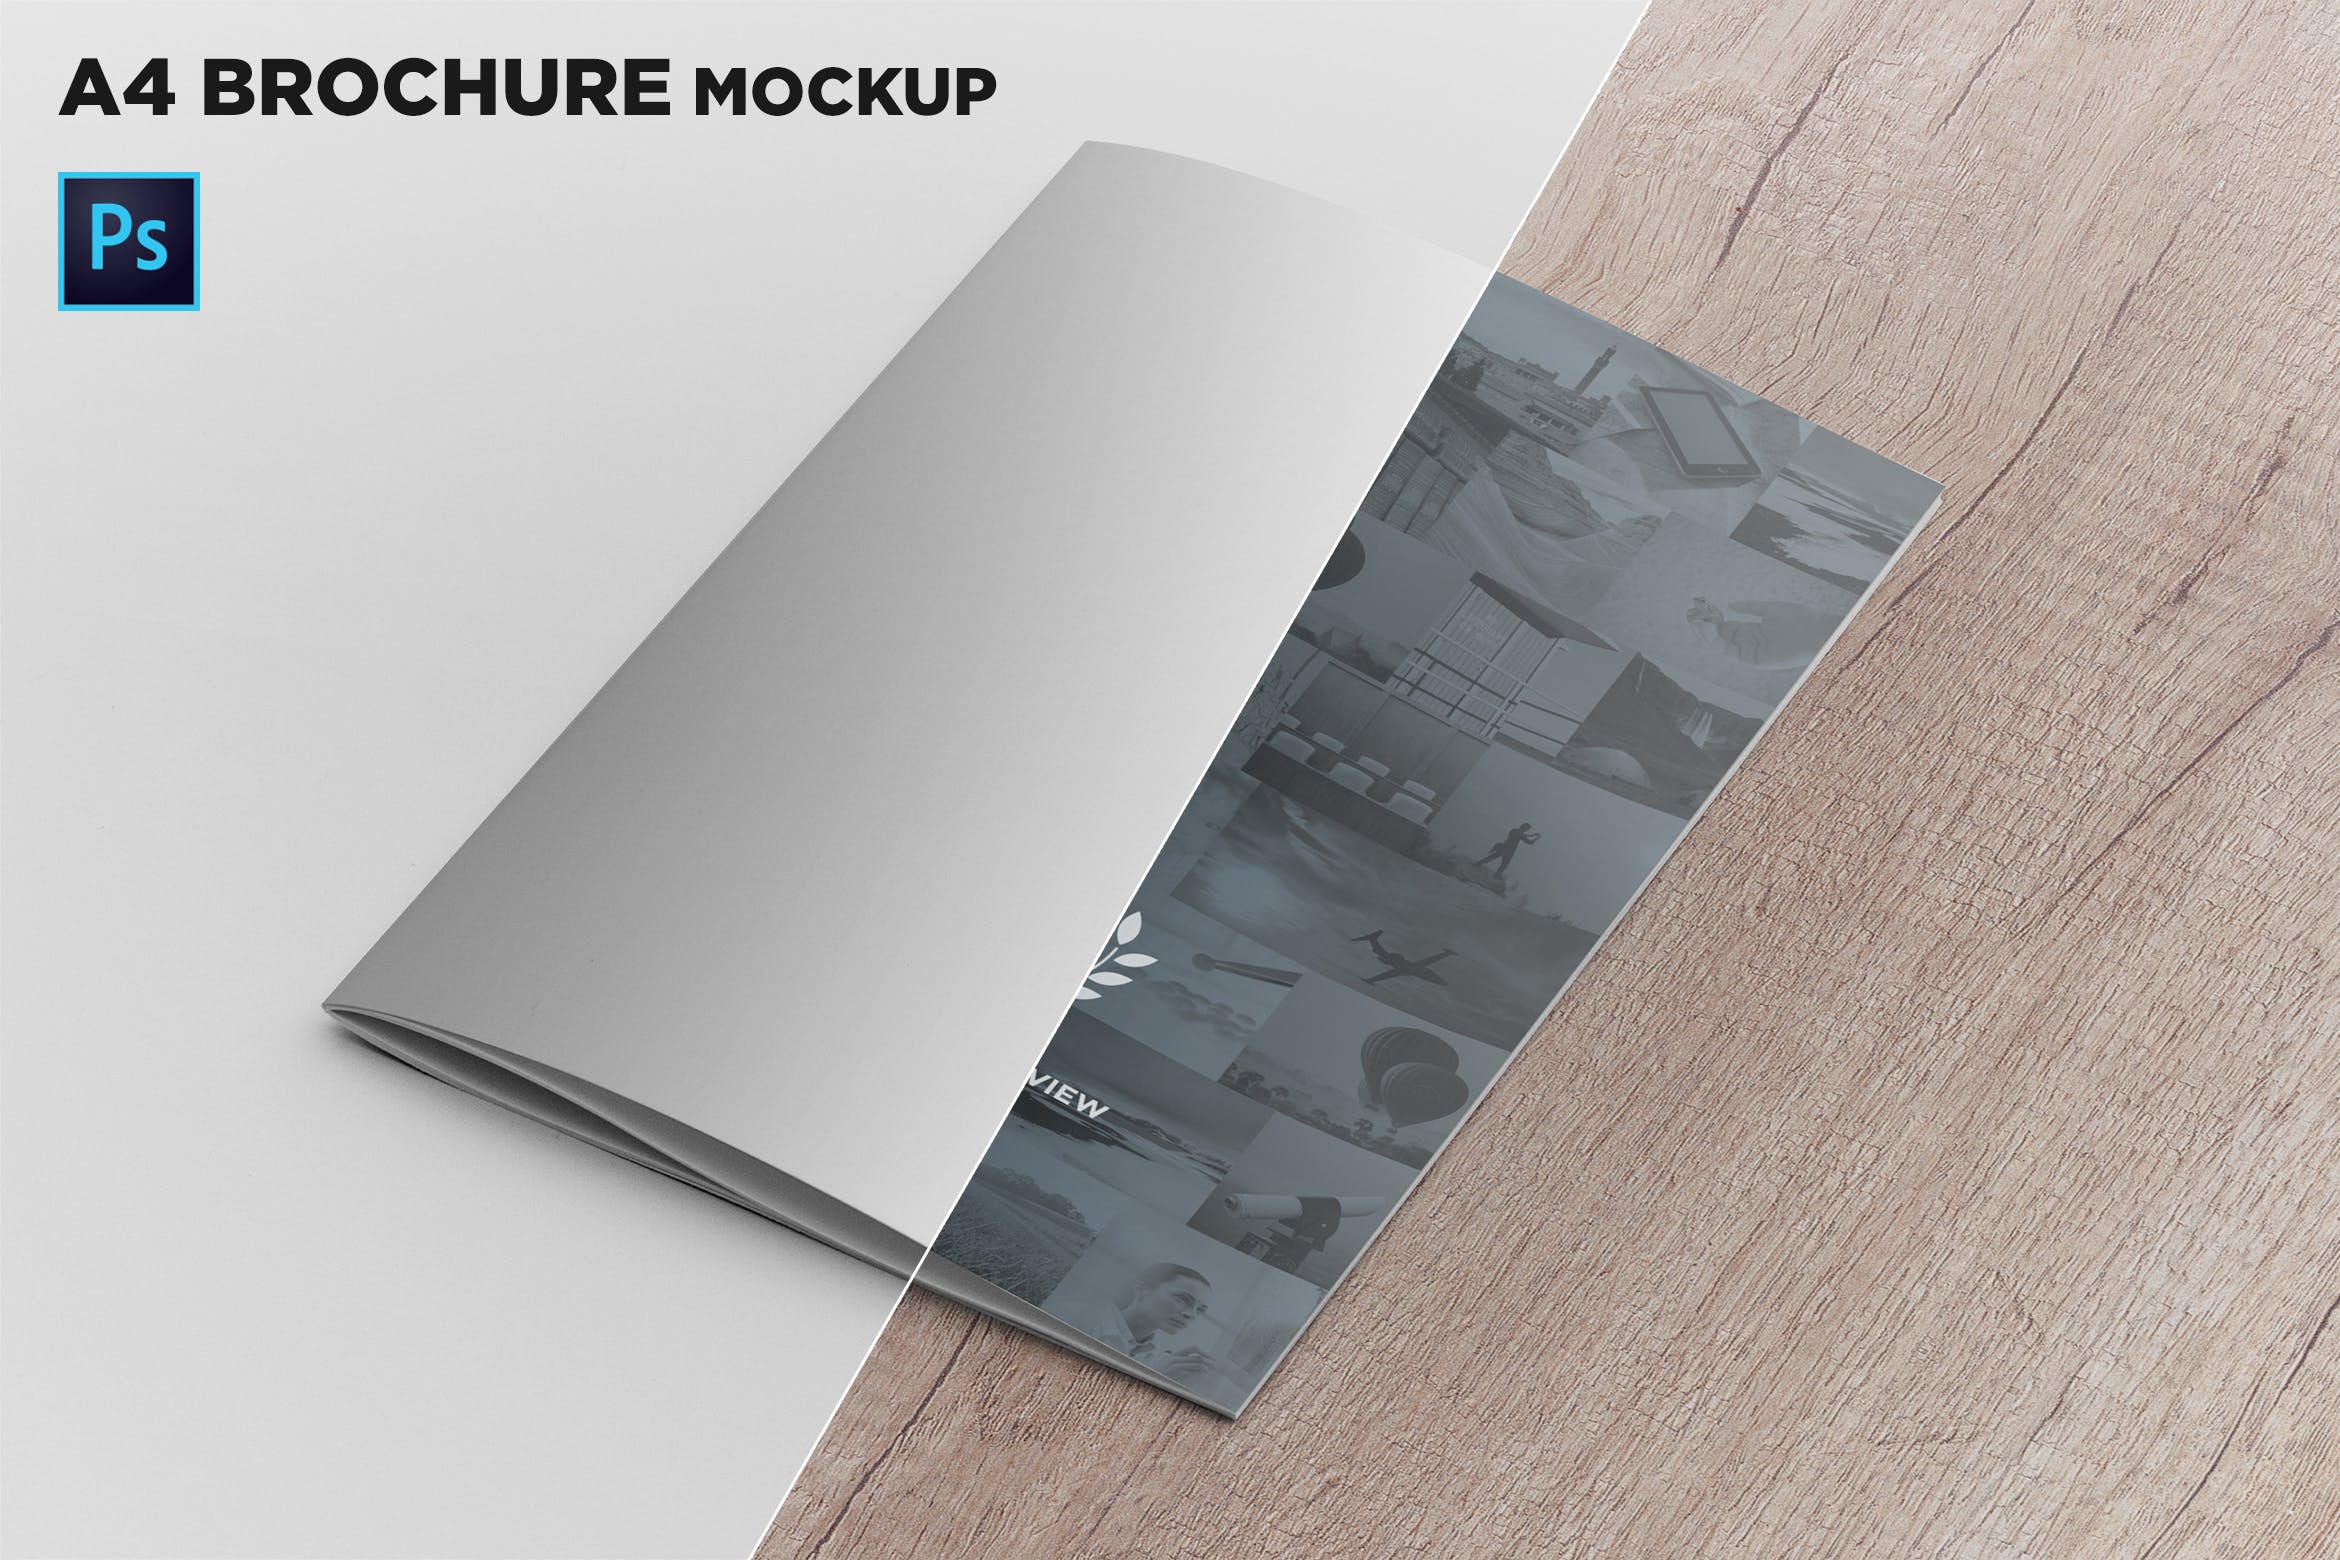 A4尺寸企业/品牌宣传册封面效果图样机16图库精选模板 A4 Brochure Cover Mockup Perspective View插图